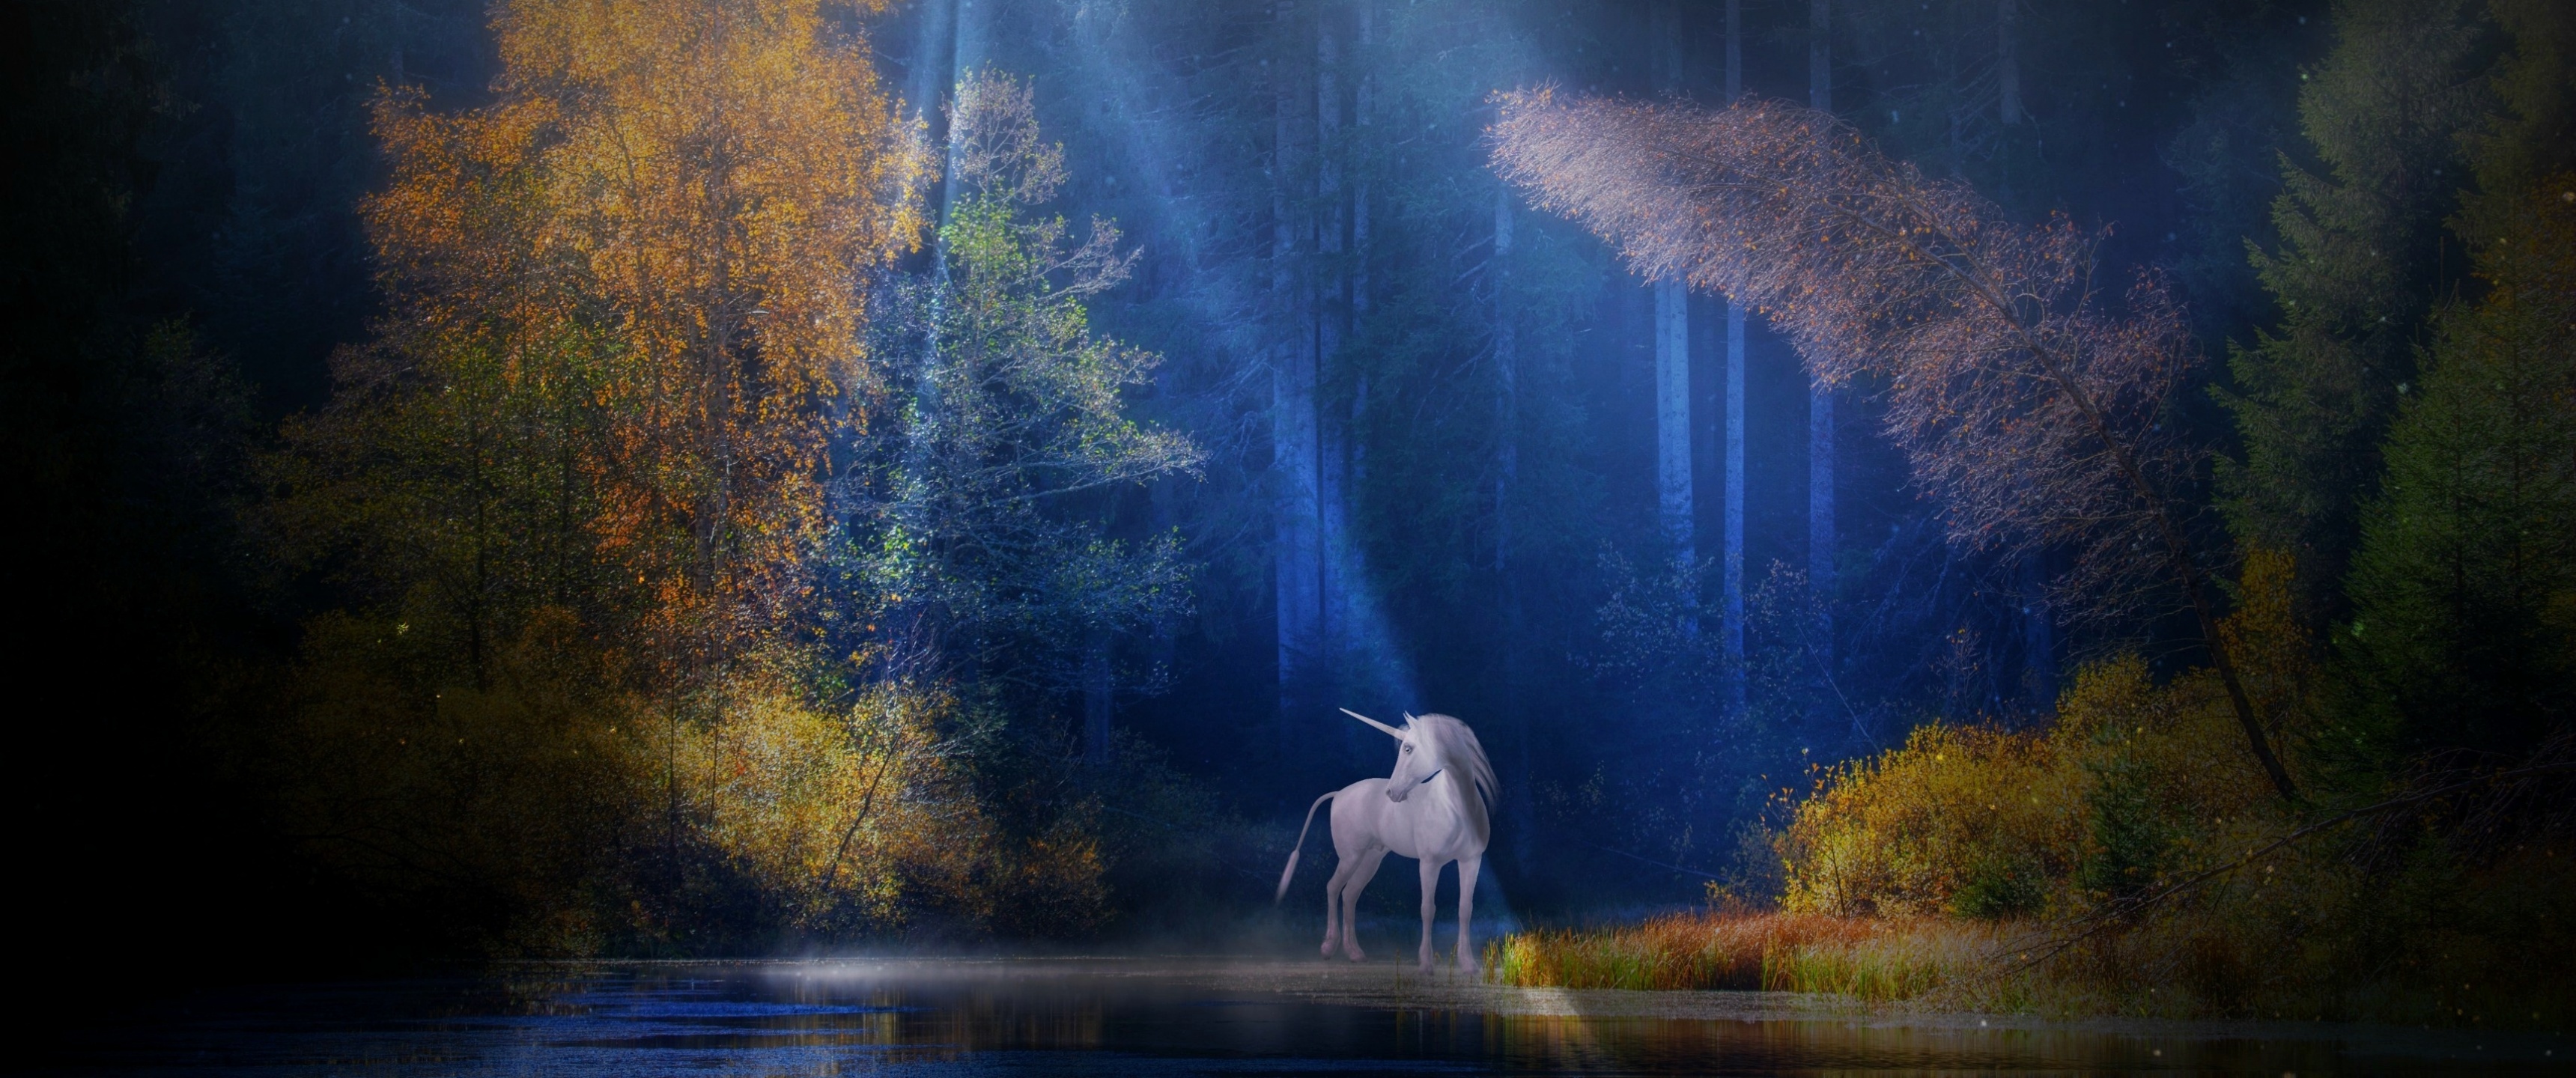 Unicorn wallpaper, Fairy tale mythical, Light beam forest, Woods fantasy, 3440x1440 Dual Screen Desktop